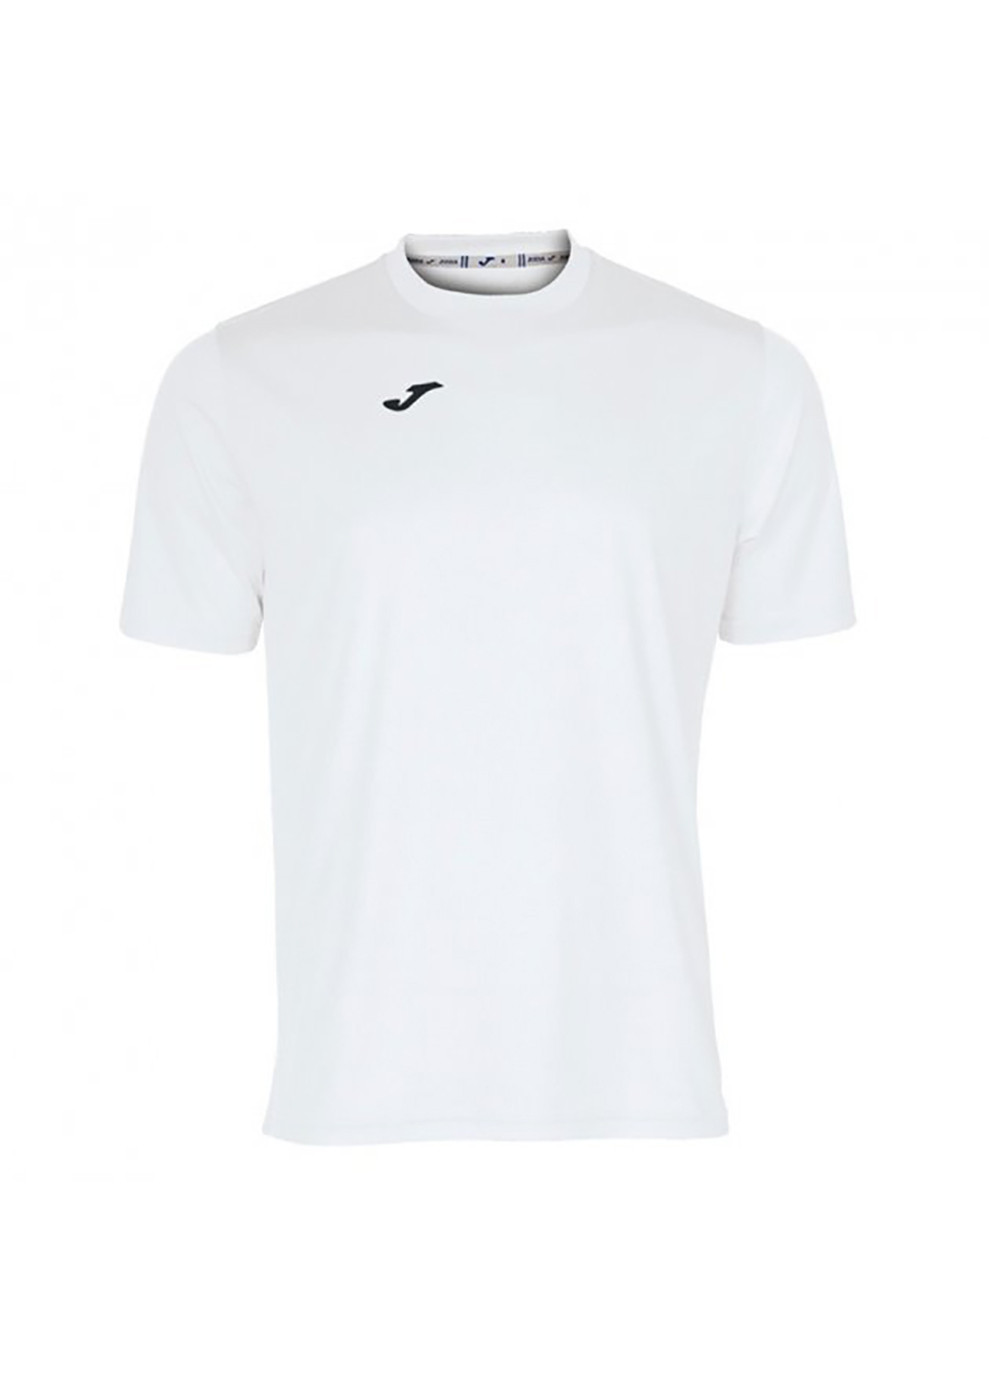 Біла футболка t-shirt combi white s/s білий 100052.200 Joma